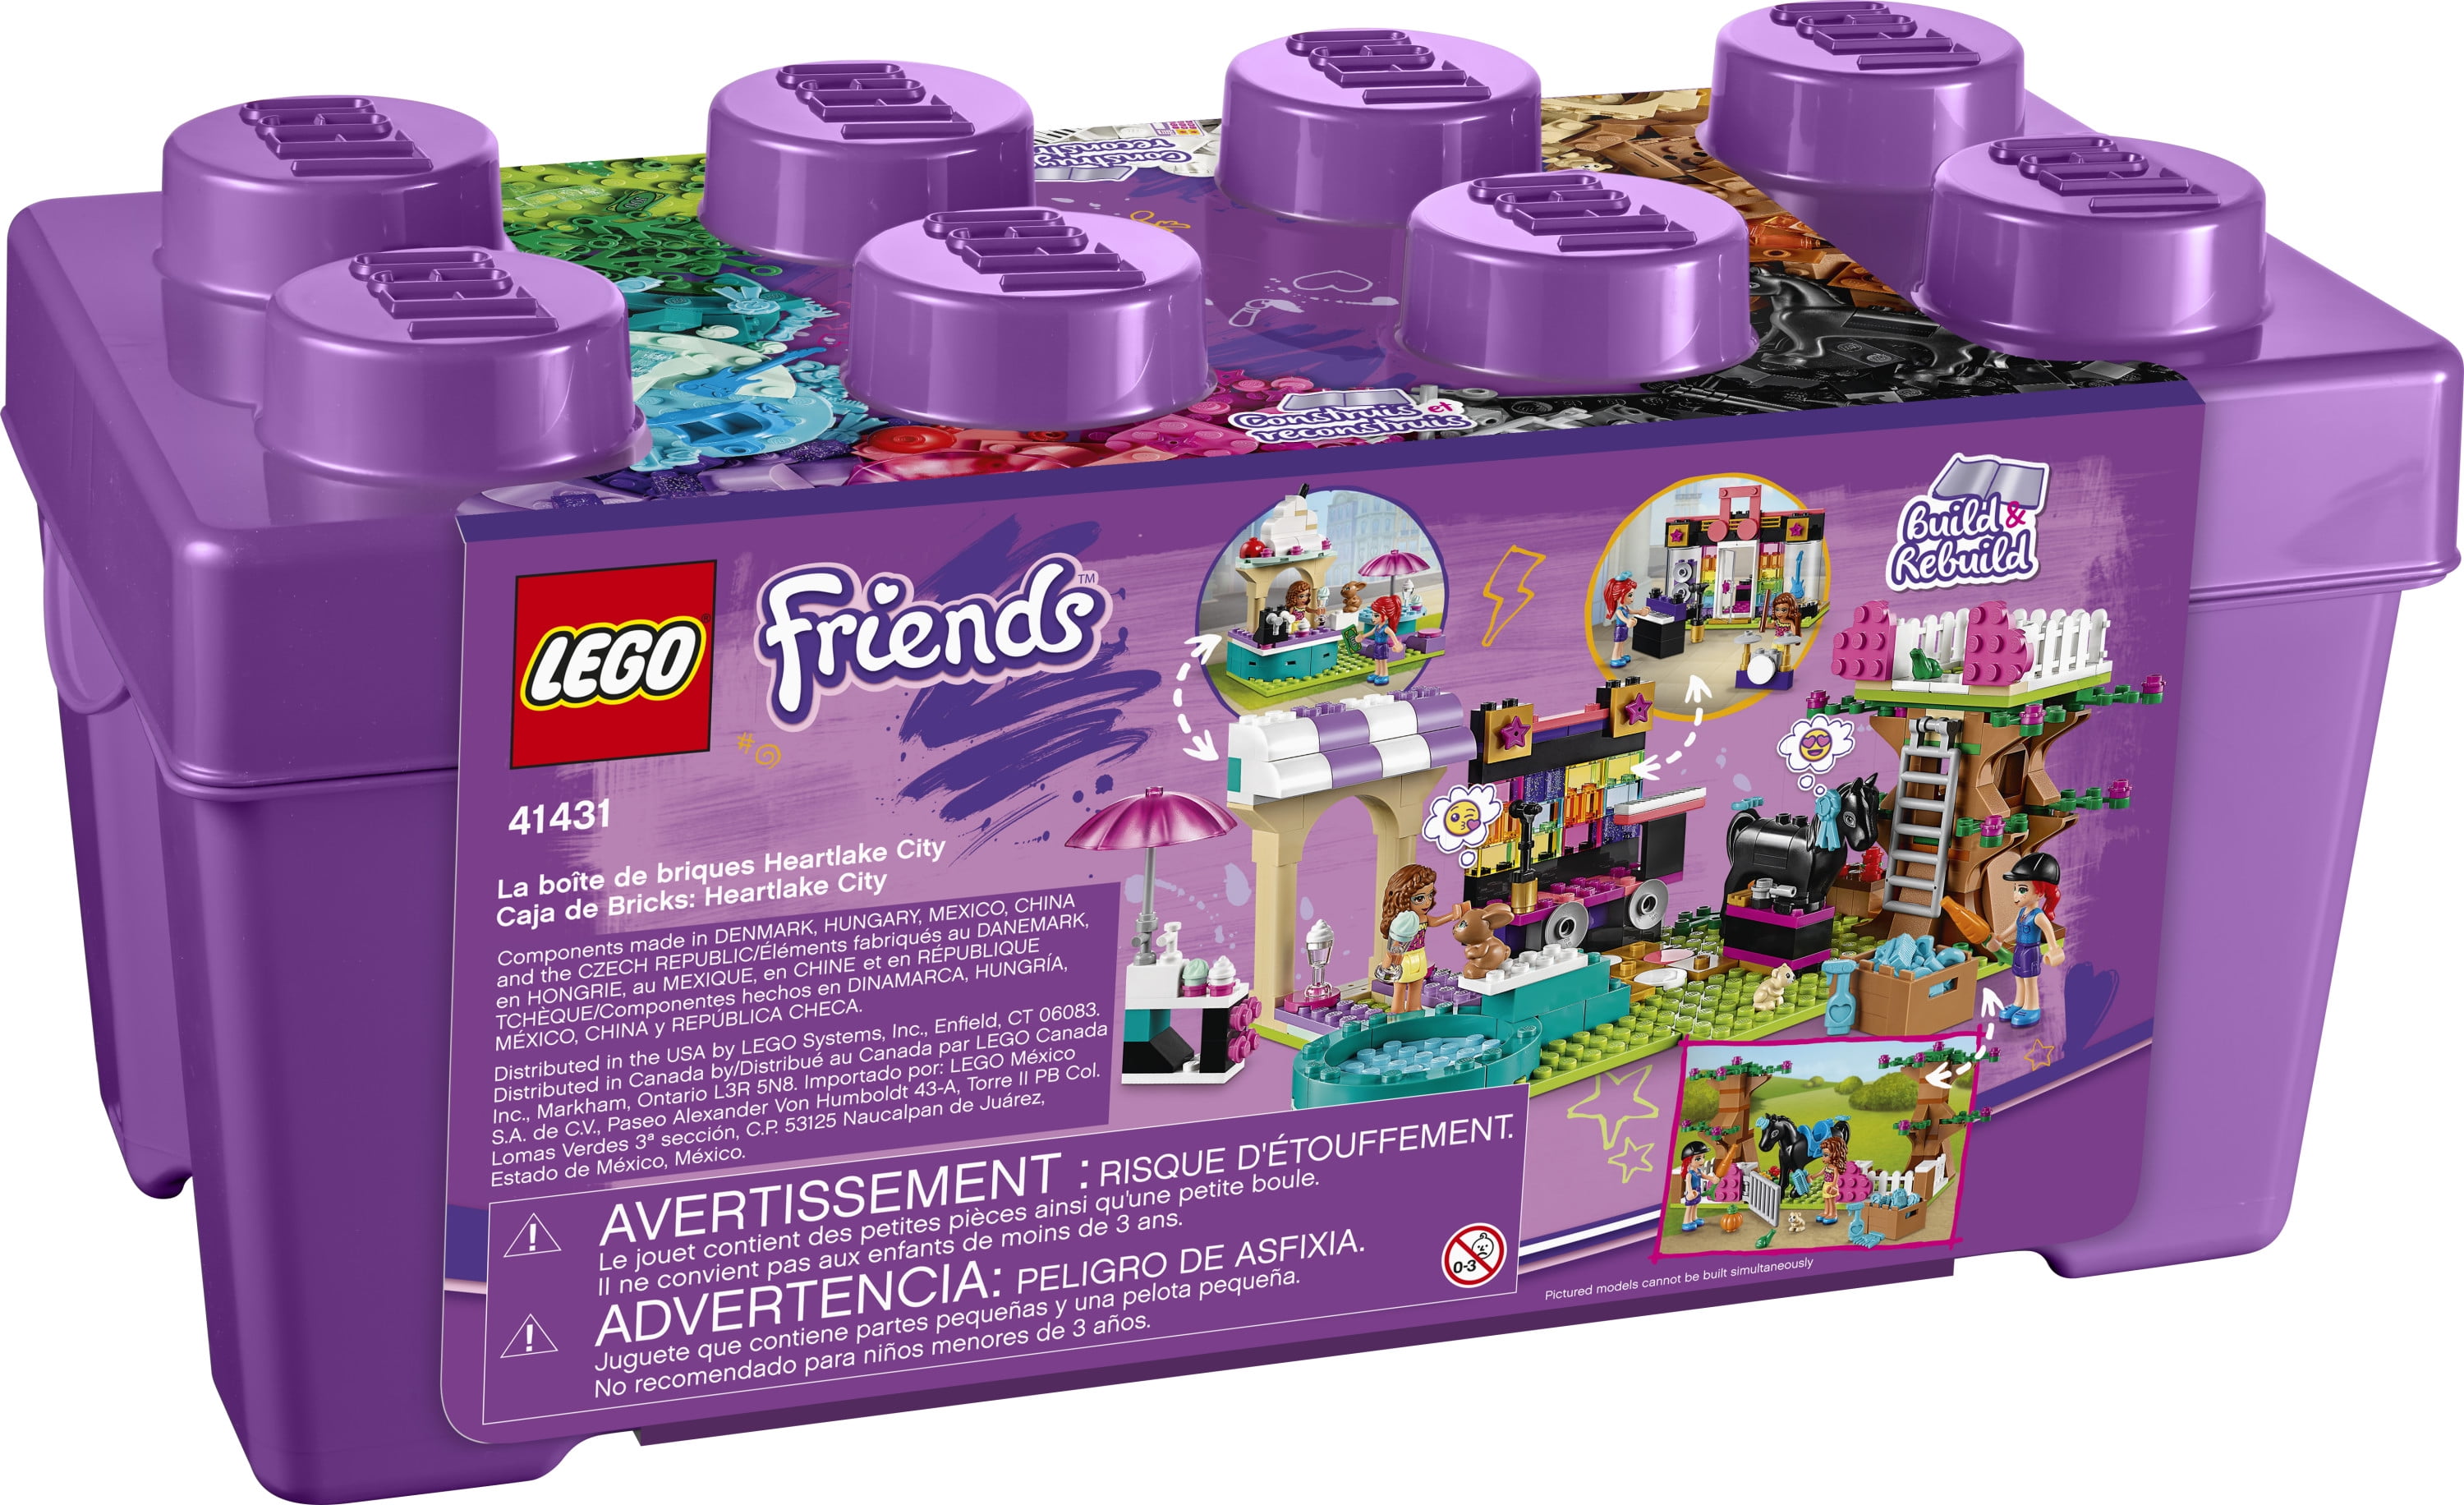 LEGO Friends Heartlake City Brick Box 41431 Building Kit; Make Scenes from 1 Box Set for Creative Fun (321 Pieces) - Walmart.com